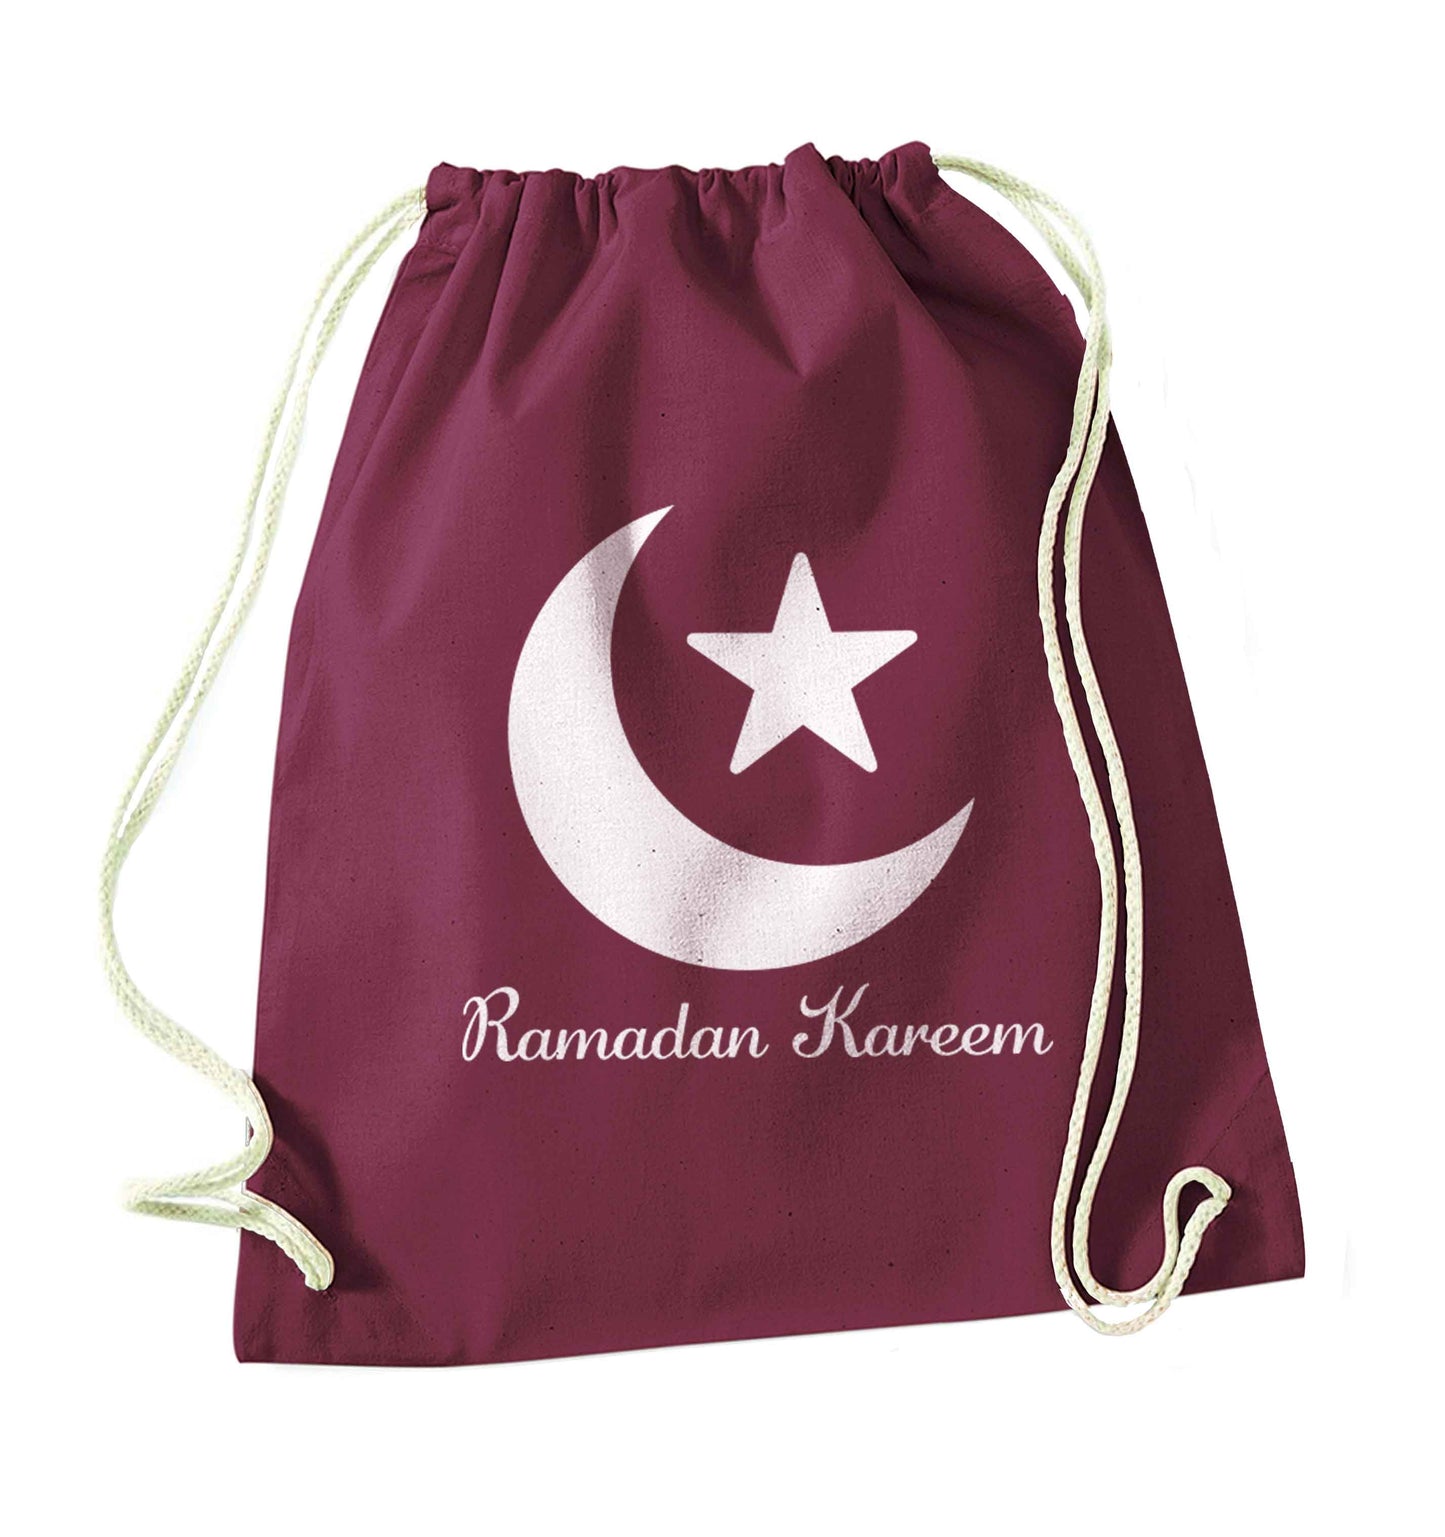 Ramadan kareem maroon drawstring bag